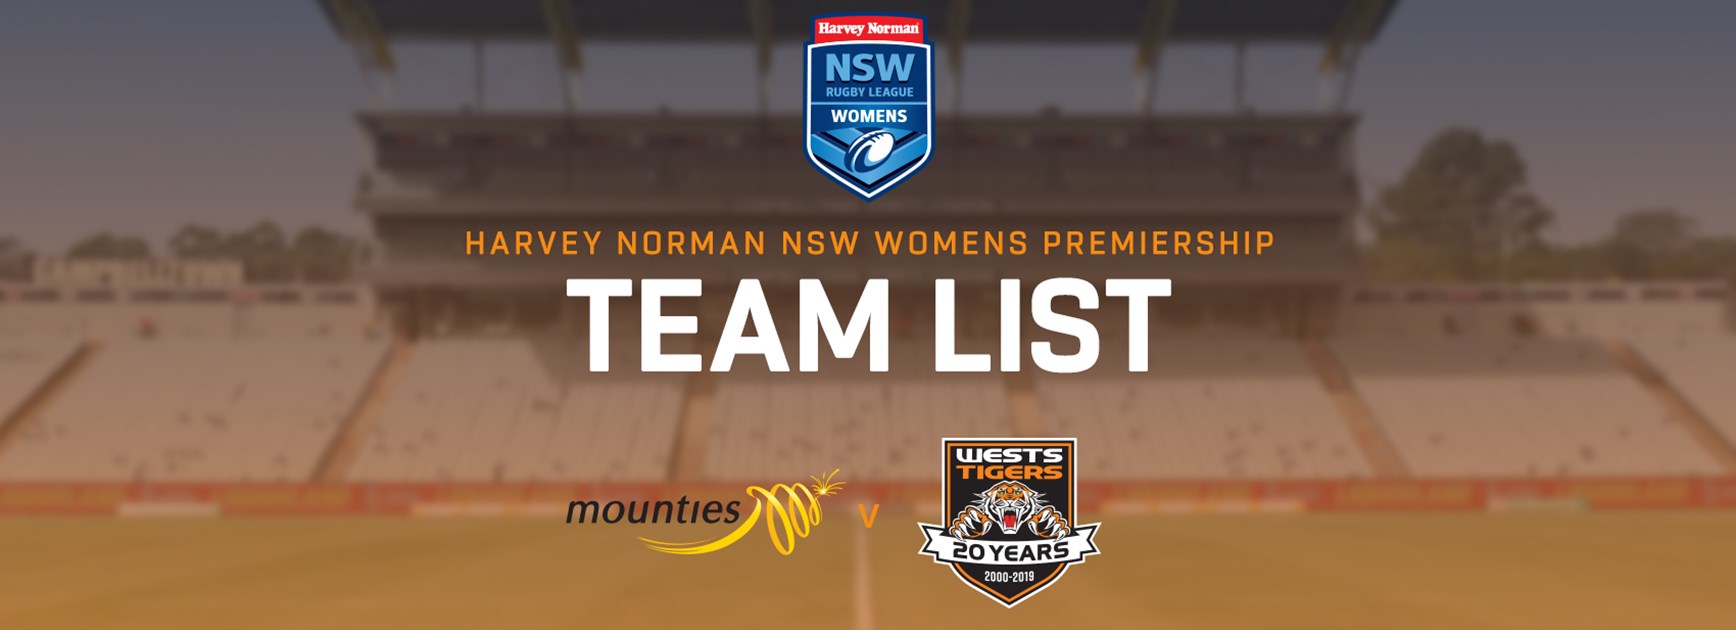 Harvey Norman NSW Women's Premiership Team Announcement: Finals, Wk.3